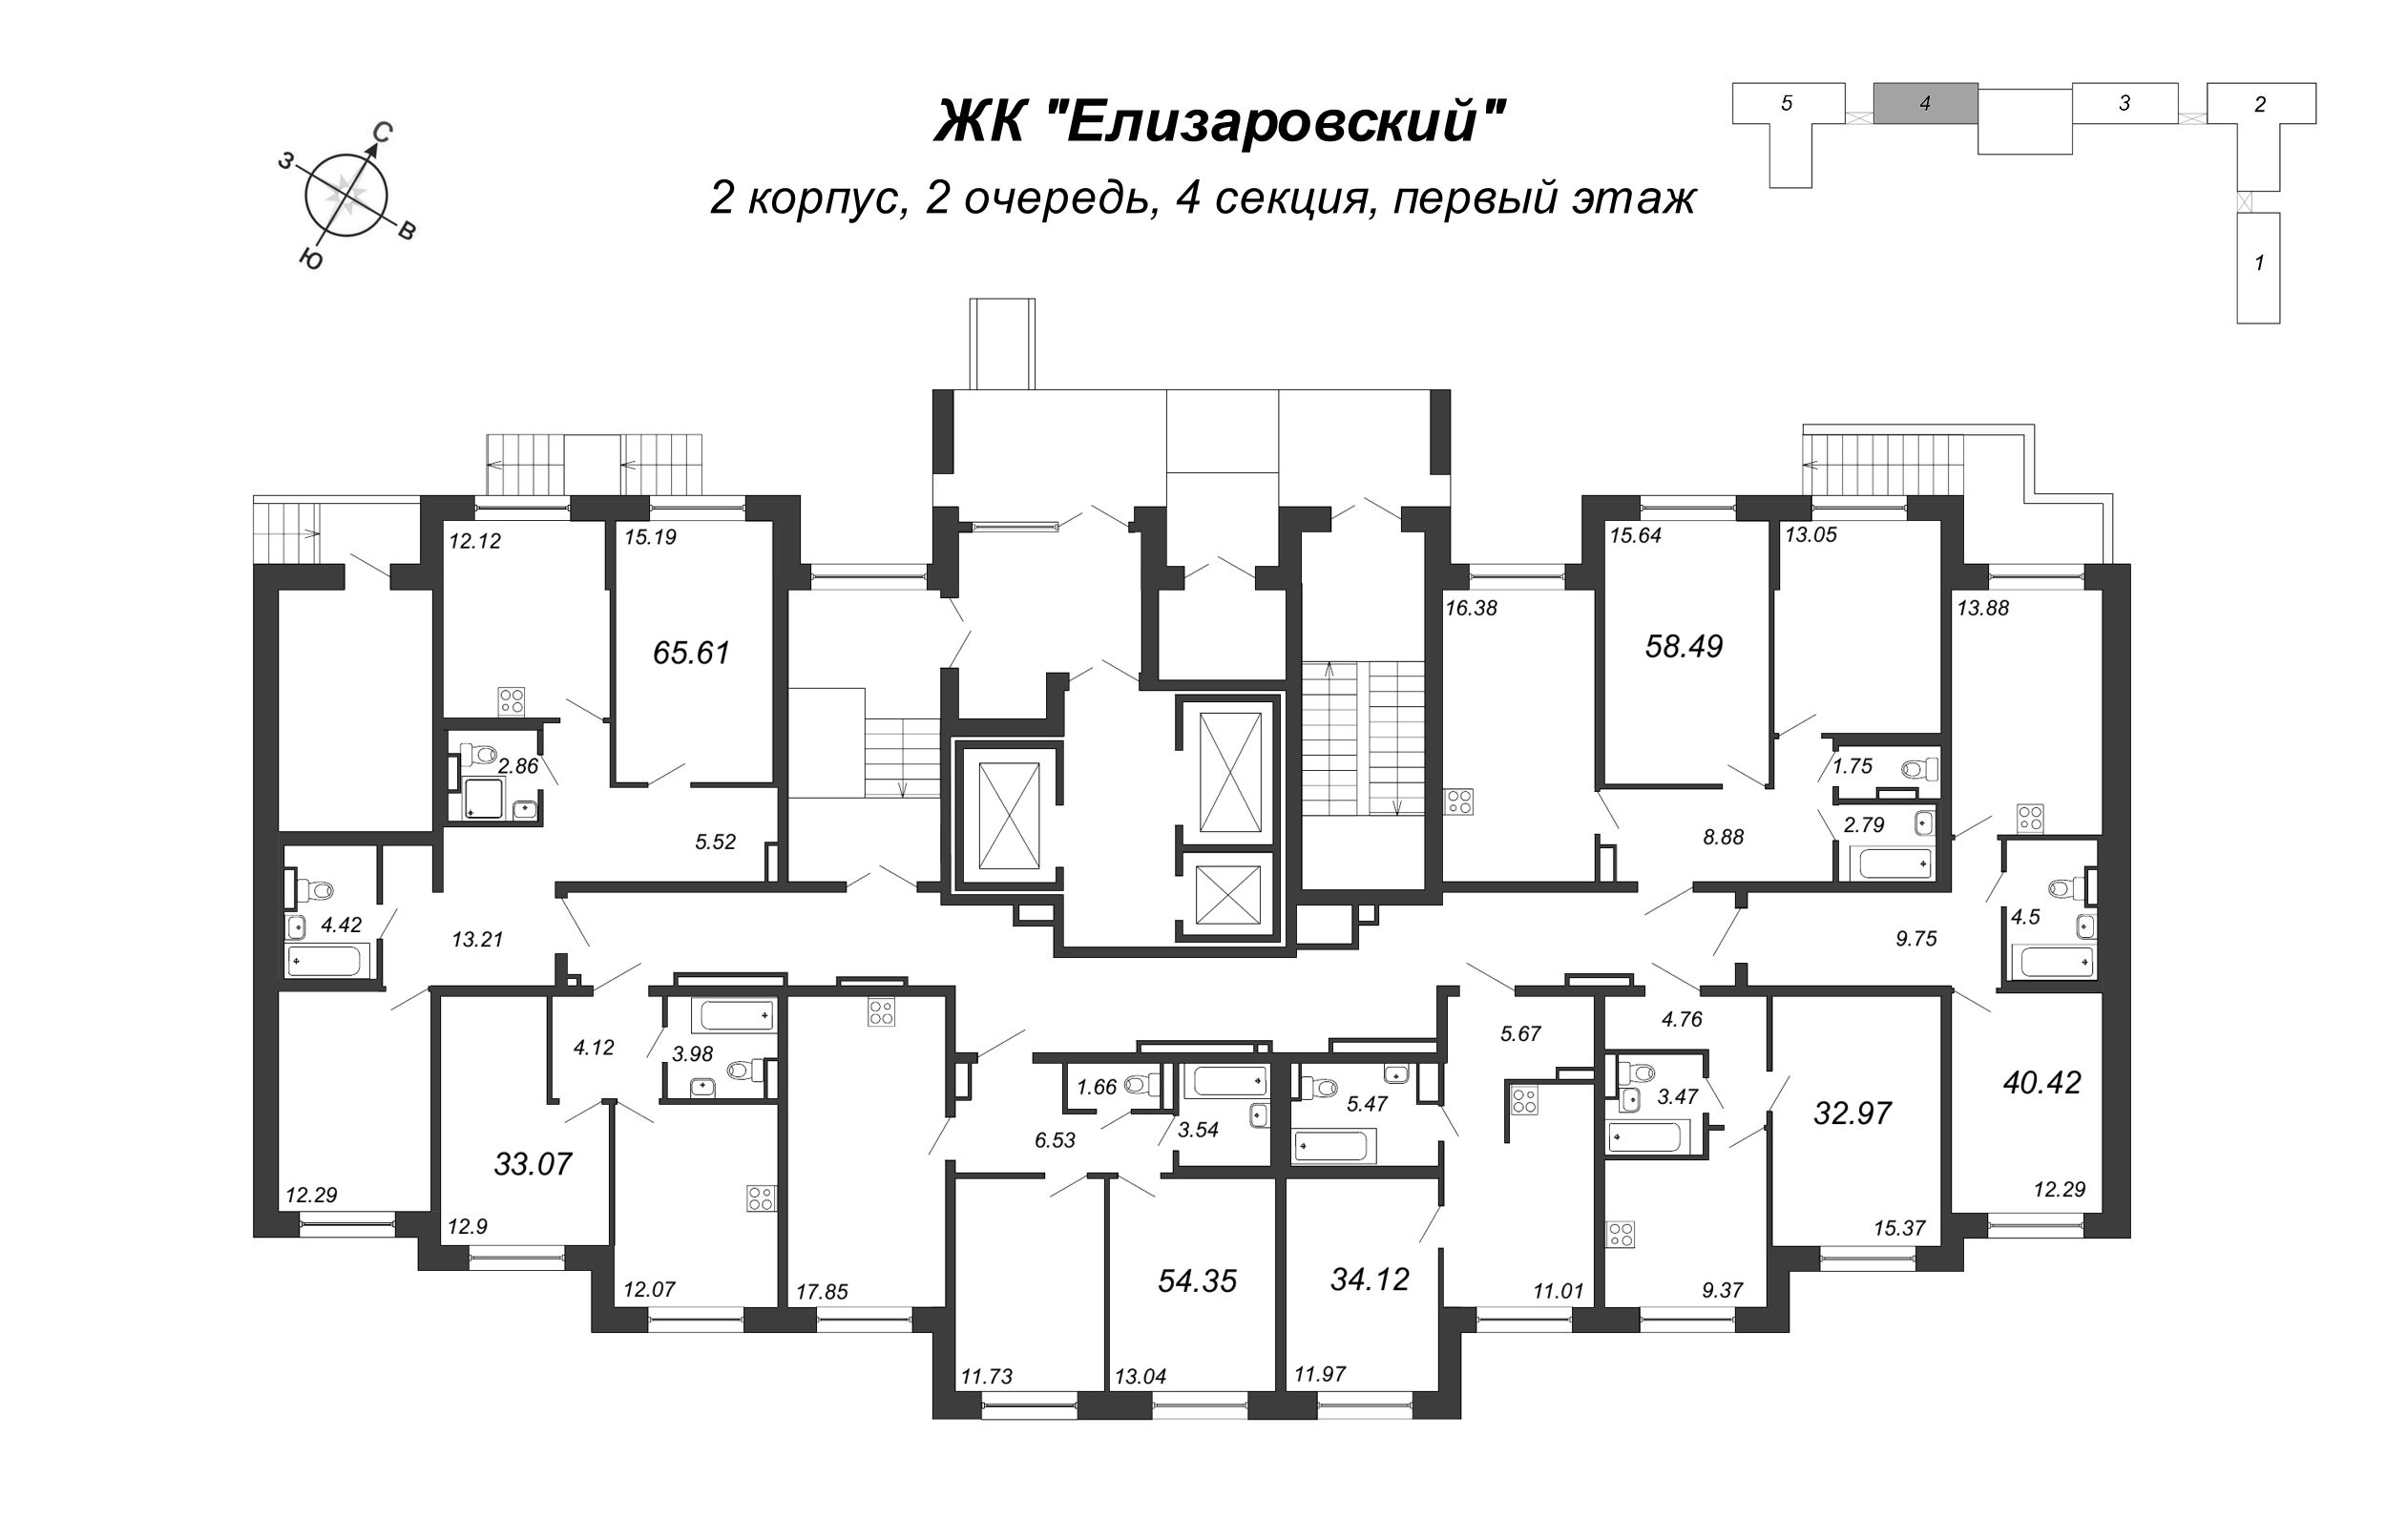 2-комнатная (Евро) квартира, 40.42 м² - планировка этажа